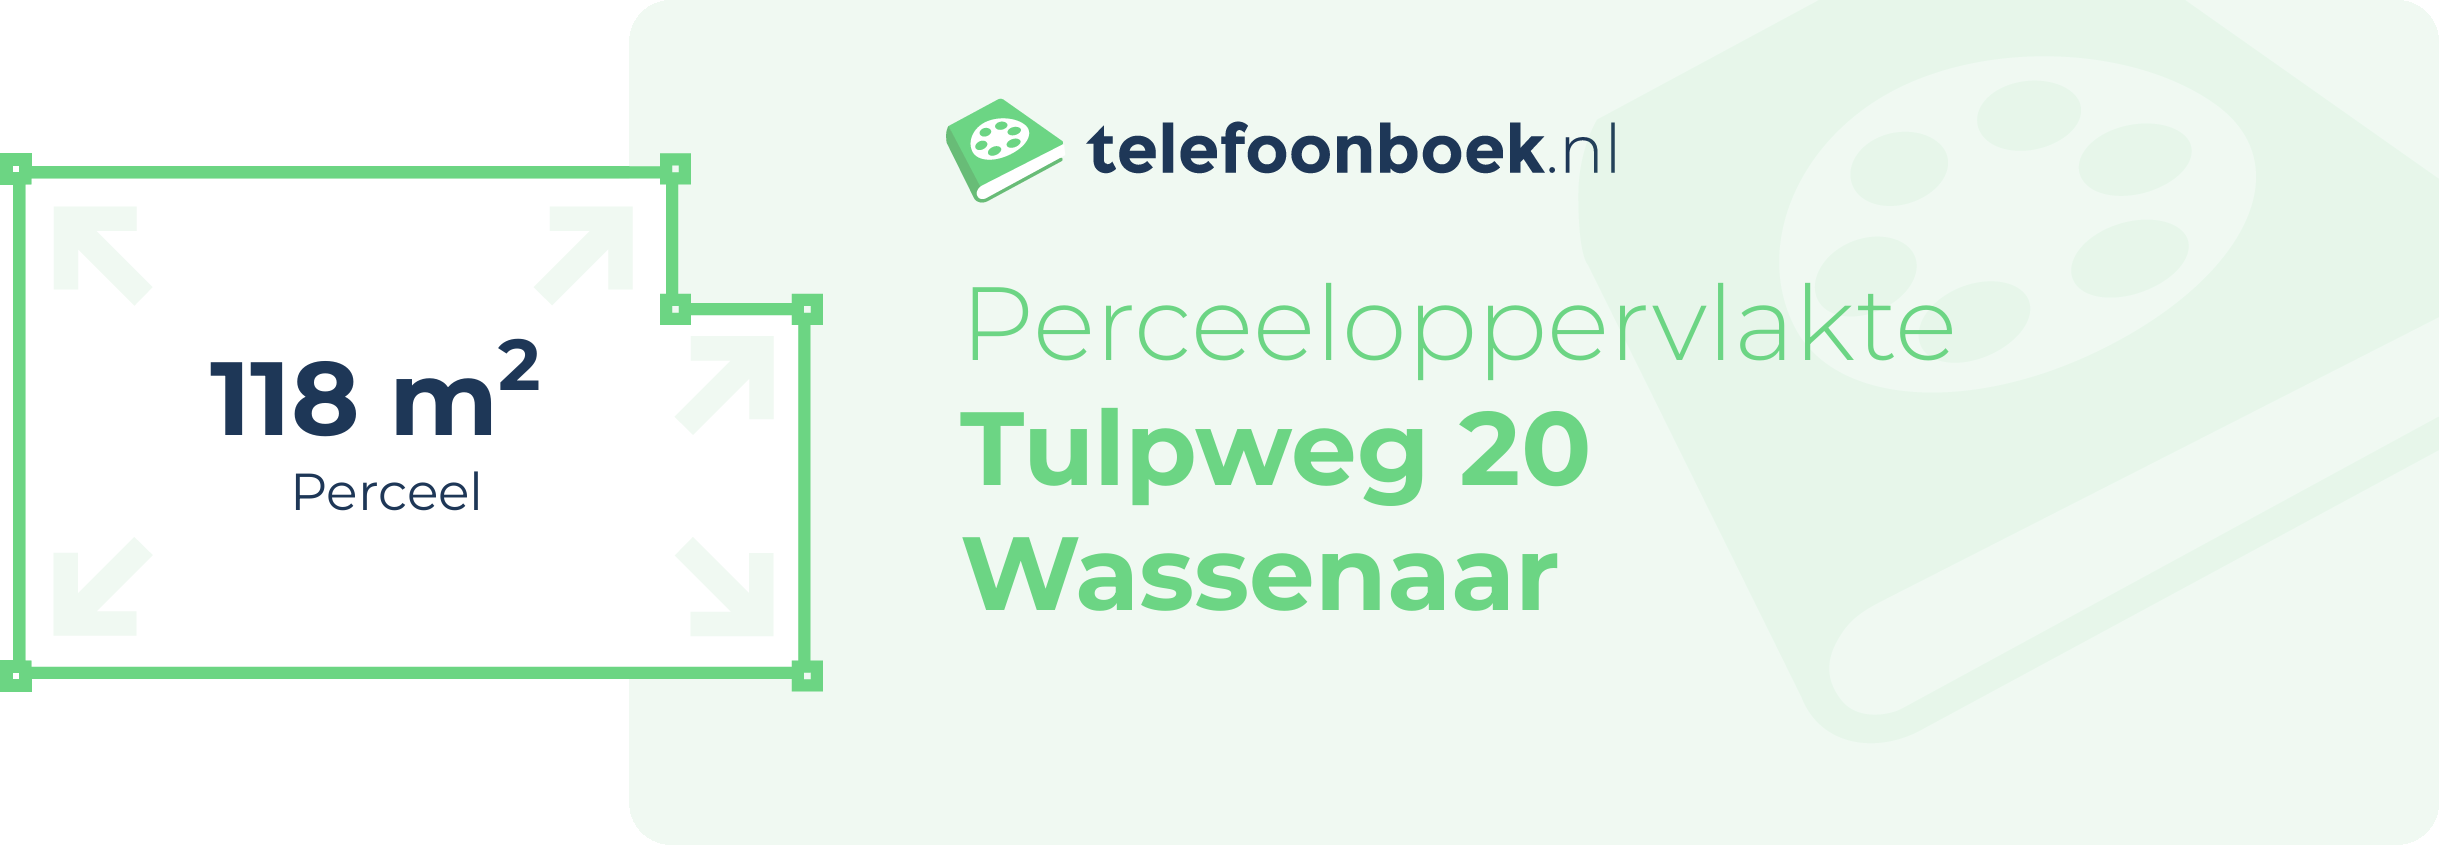 Perceeloppervlakte Tulpweg 20 Wassenaar